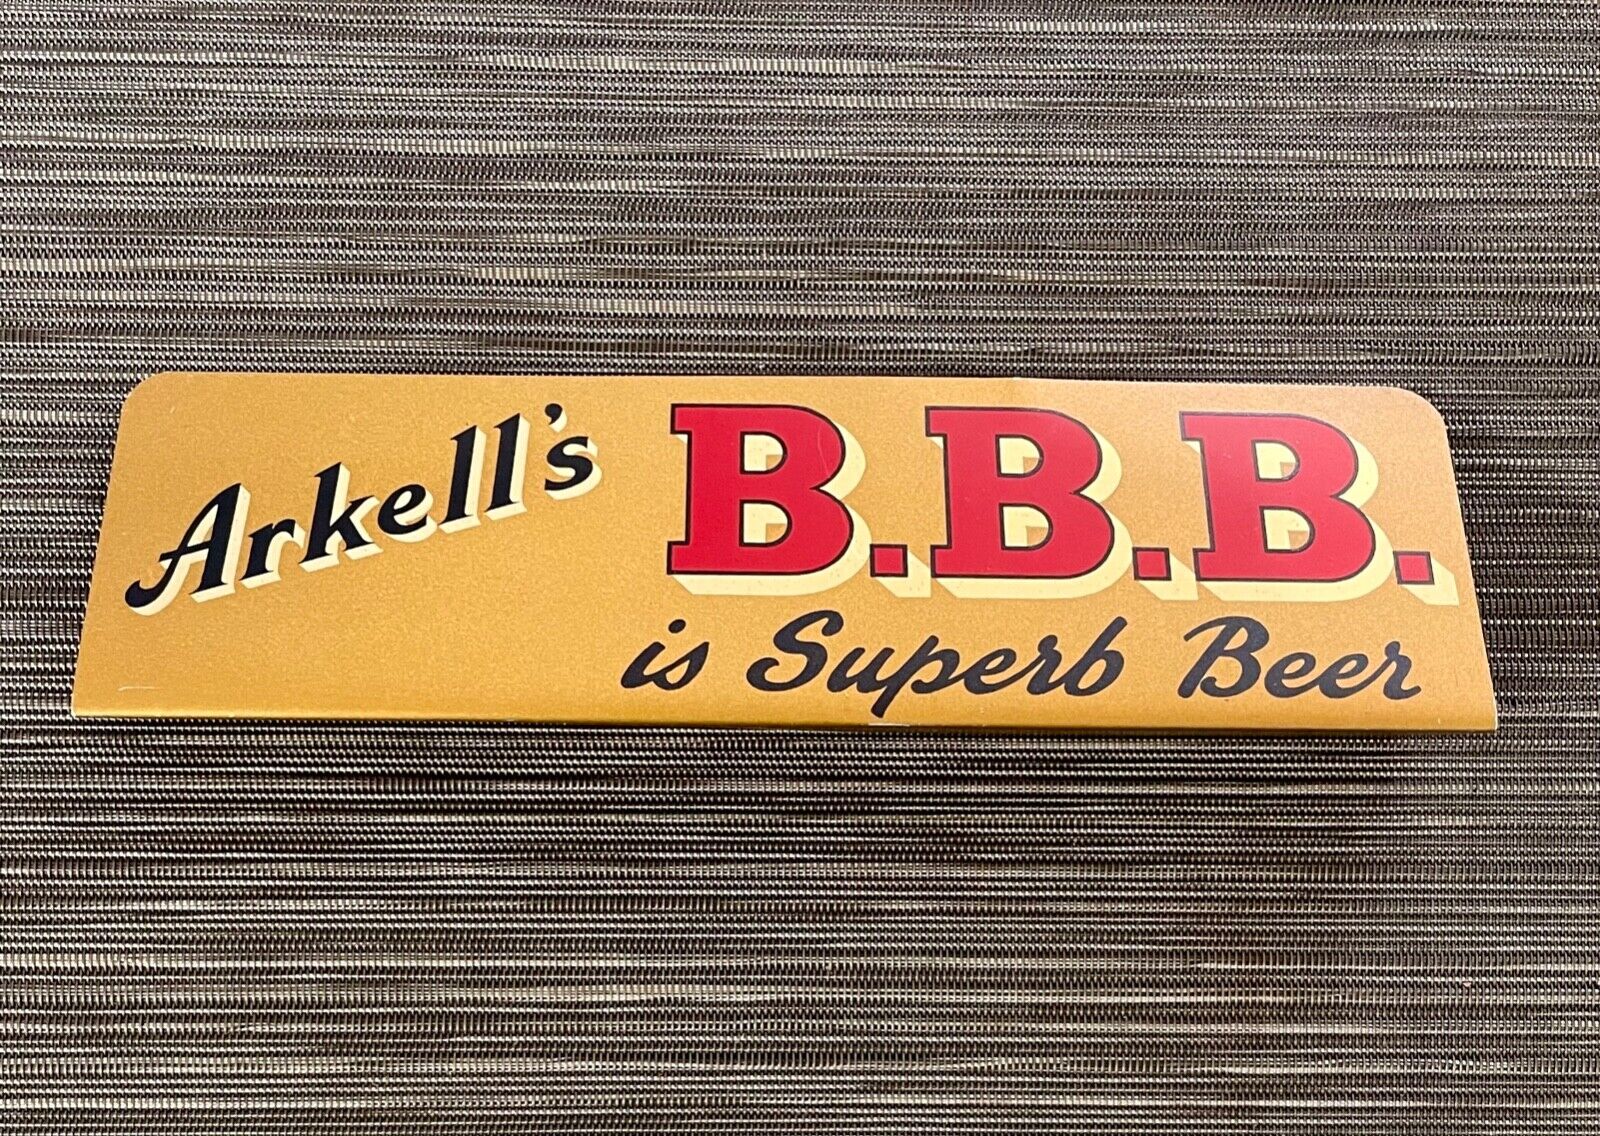 Vintage ARKELL'S SWINDON BBB BEST BITTER BEER Pub Bar Aluminum Promo Sign